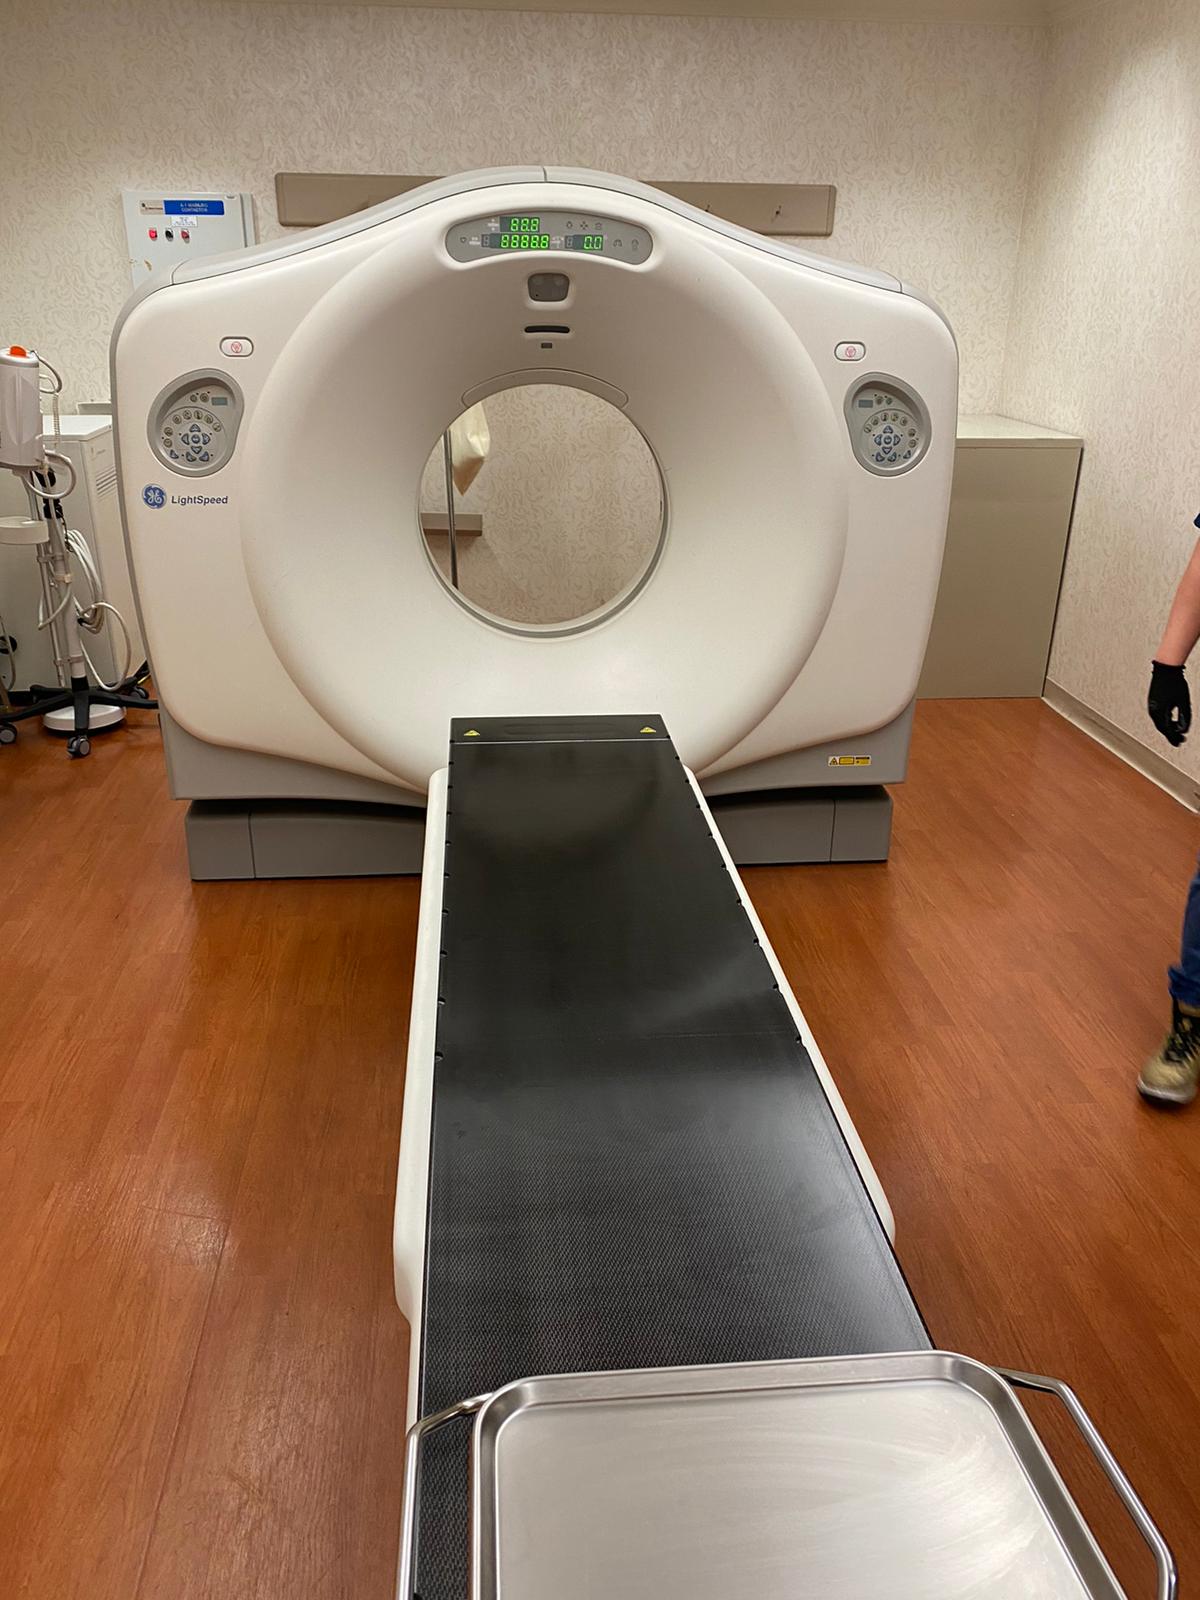 GE LightSpeed QXi 4 Slice CT Scanner